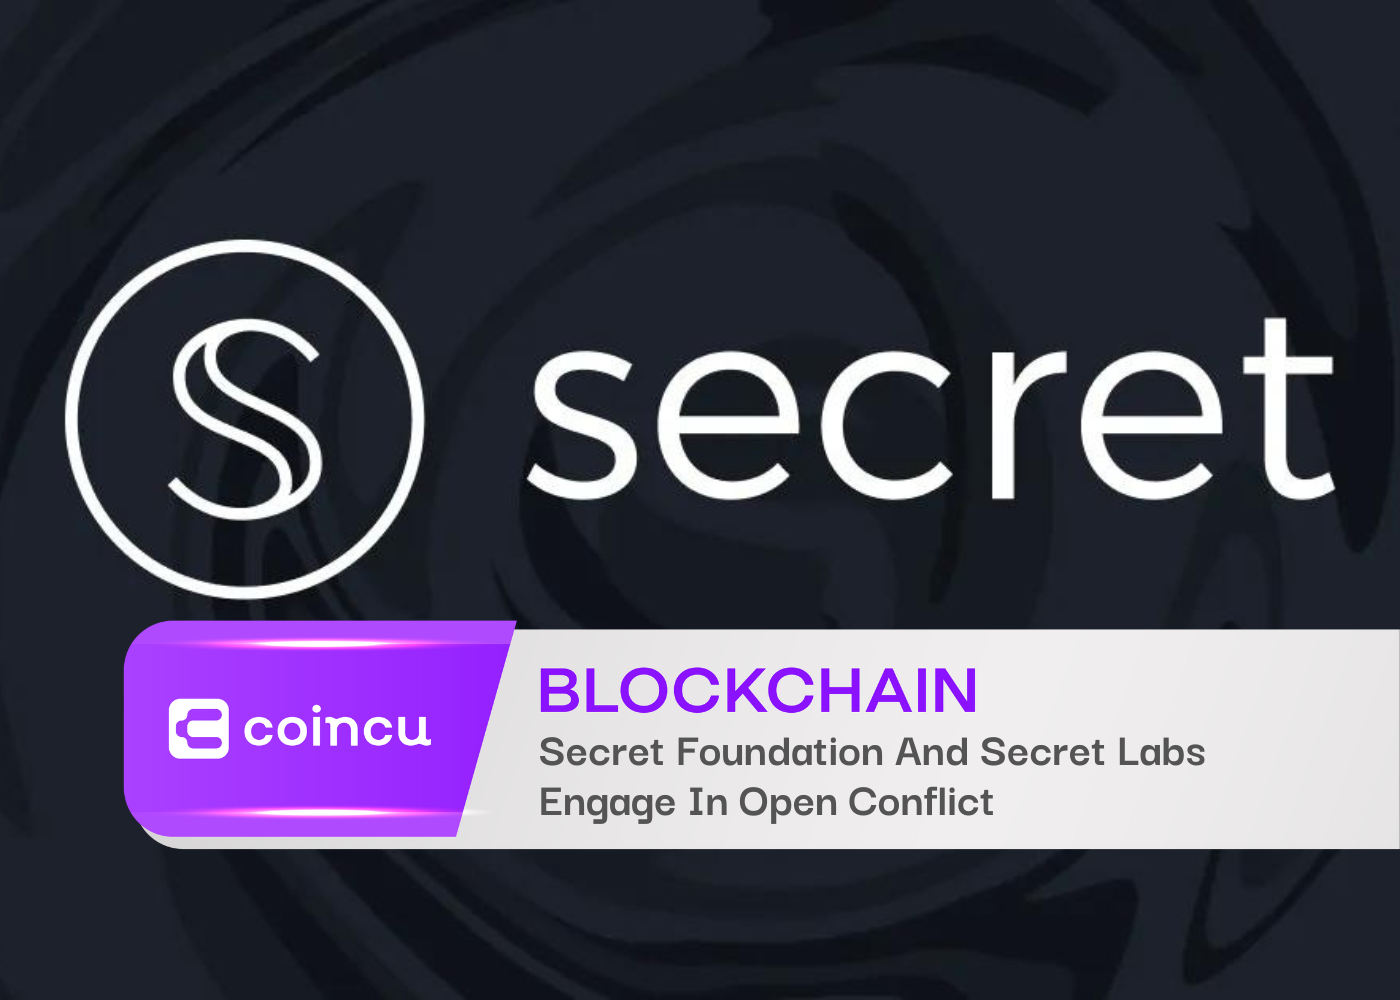 Secret Foundation And Secret Labs